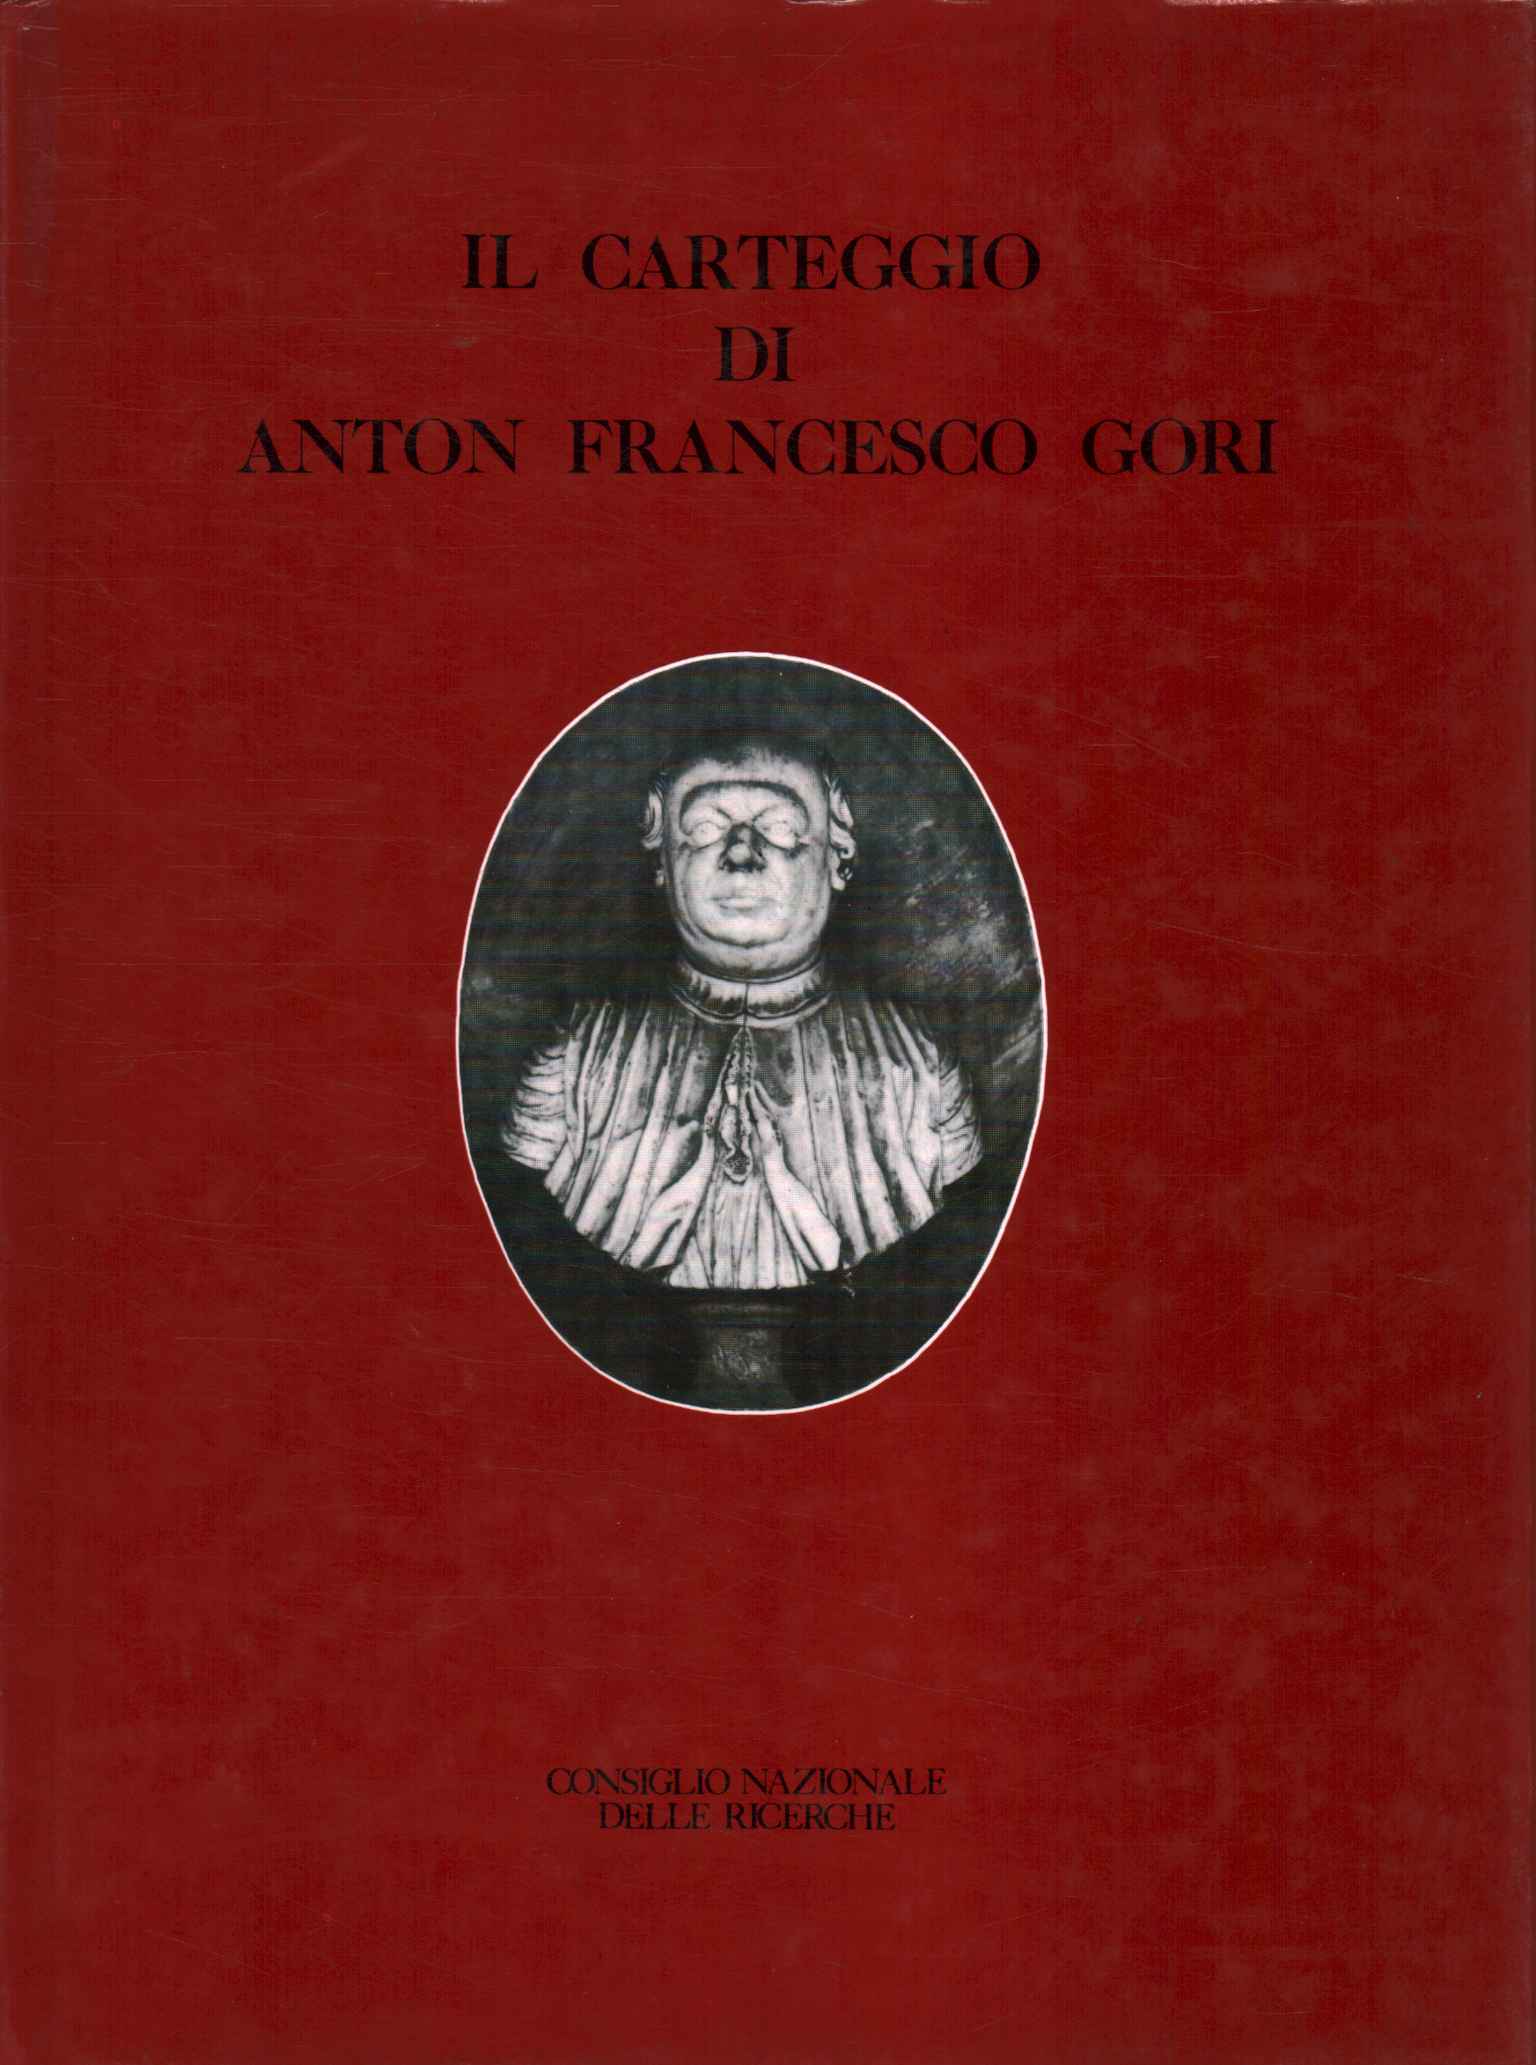 The correspondence of Anton Francesco Gori